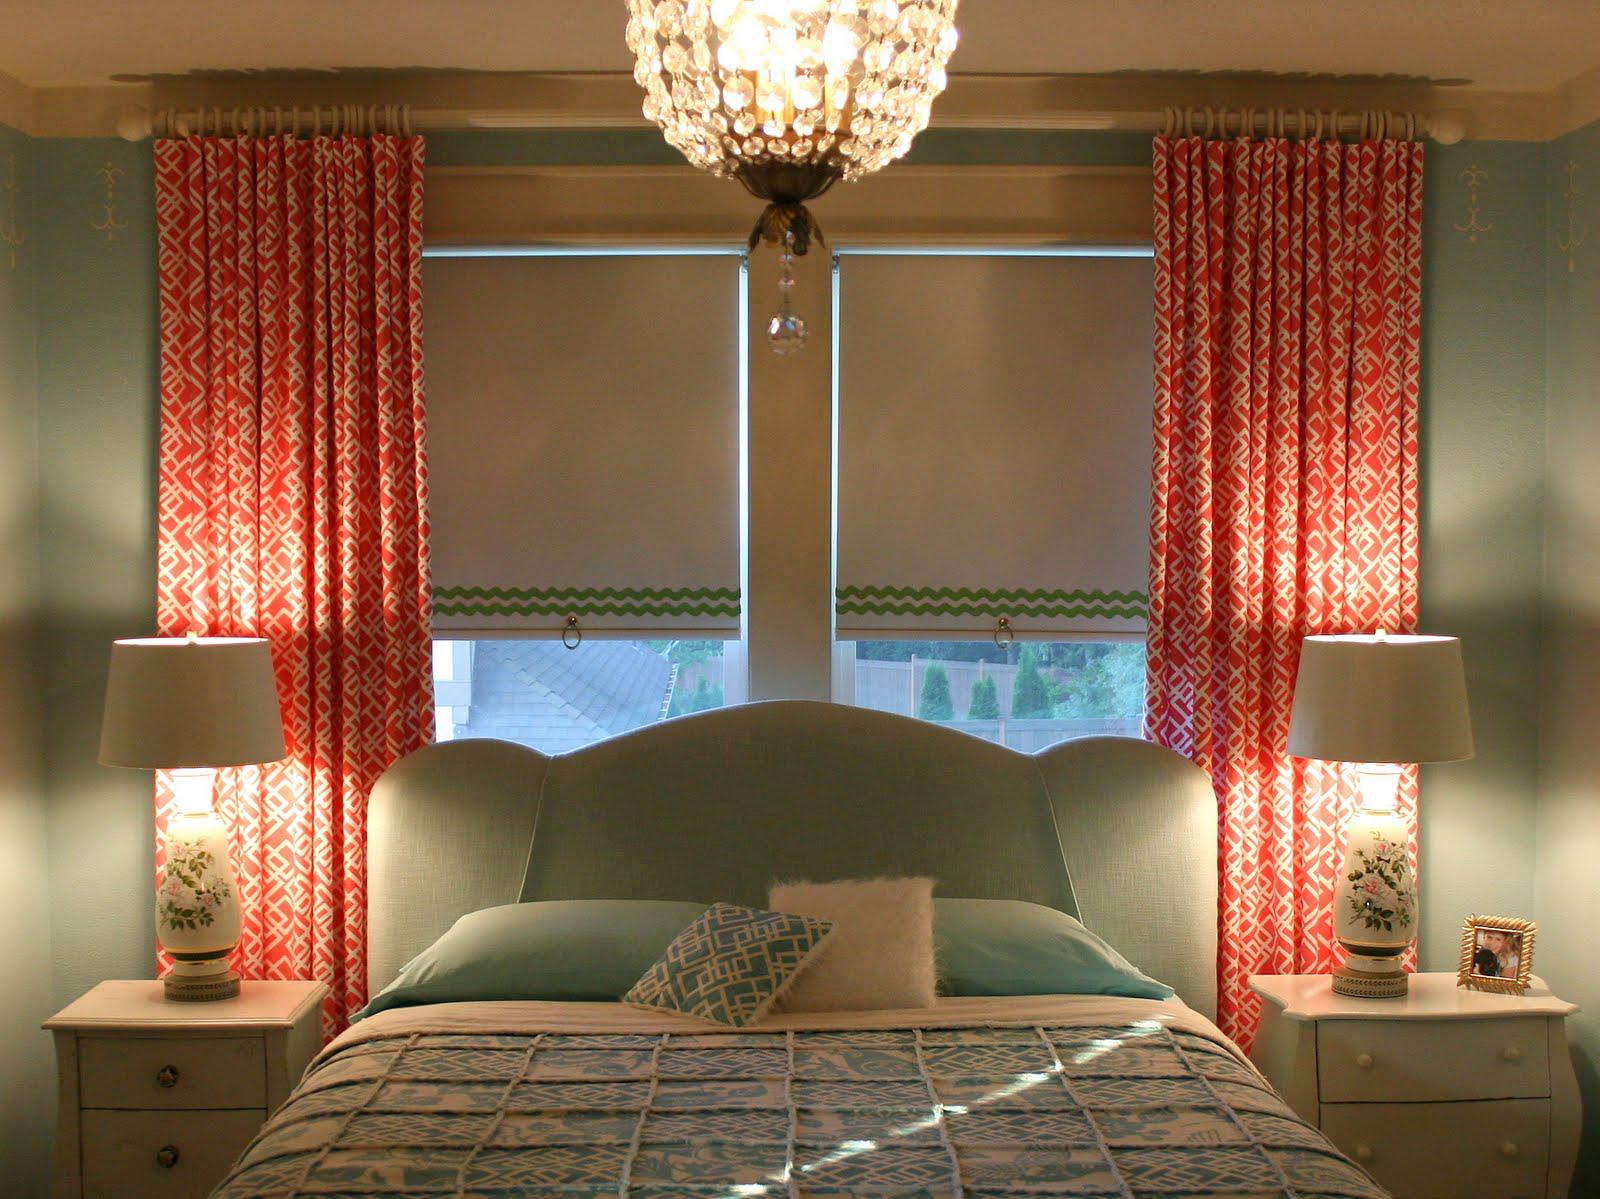 Bedroom Curtain Color Ideas